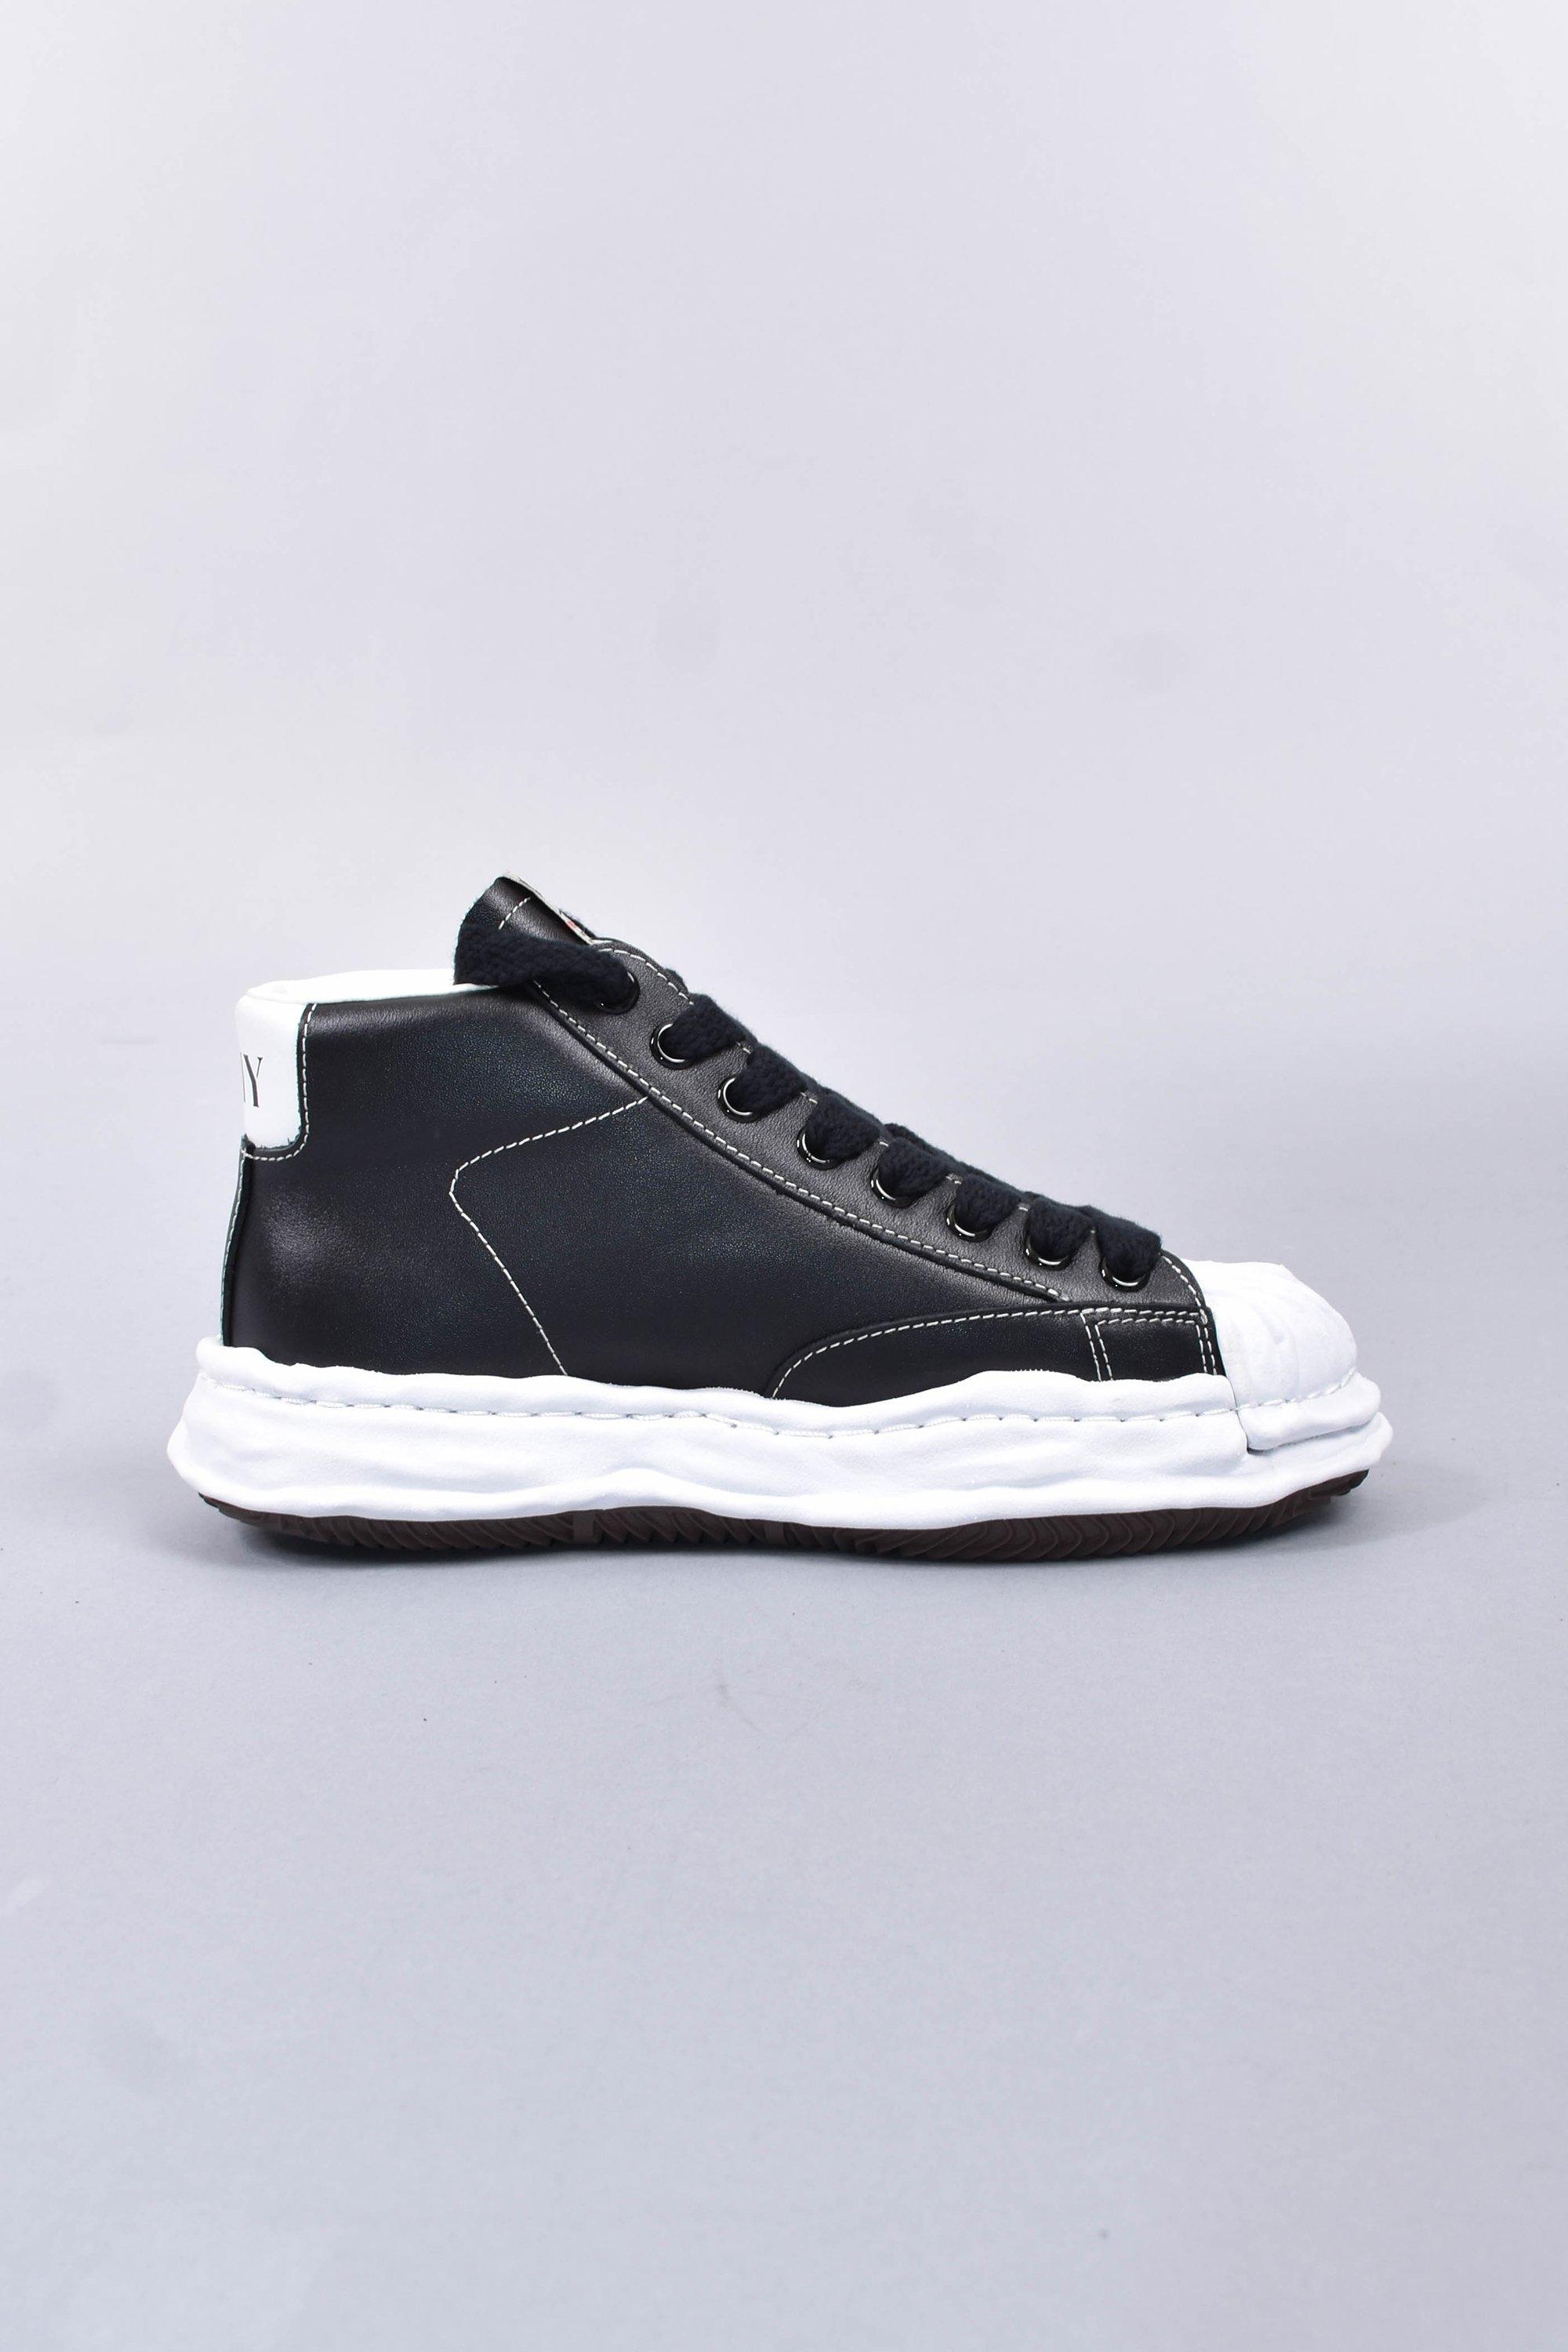 Maison Mihara Yasuhiro High Blakey Leather Sneakers in Black for Men | Lyst